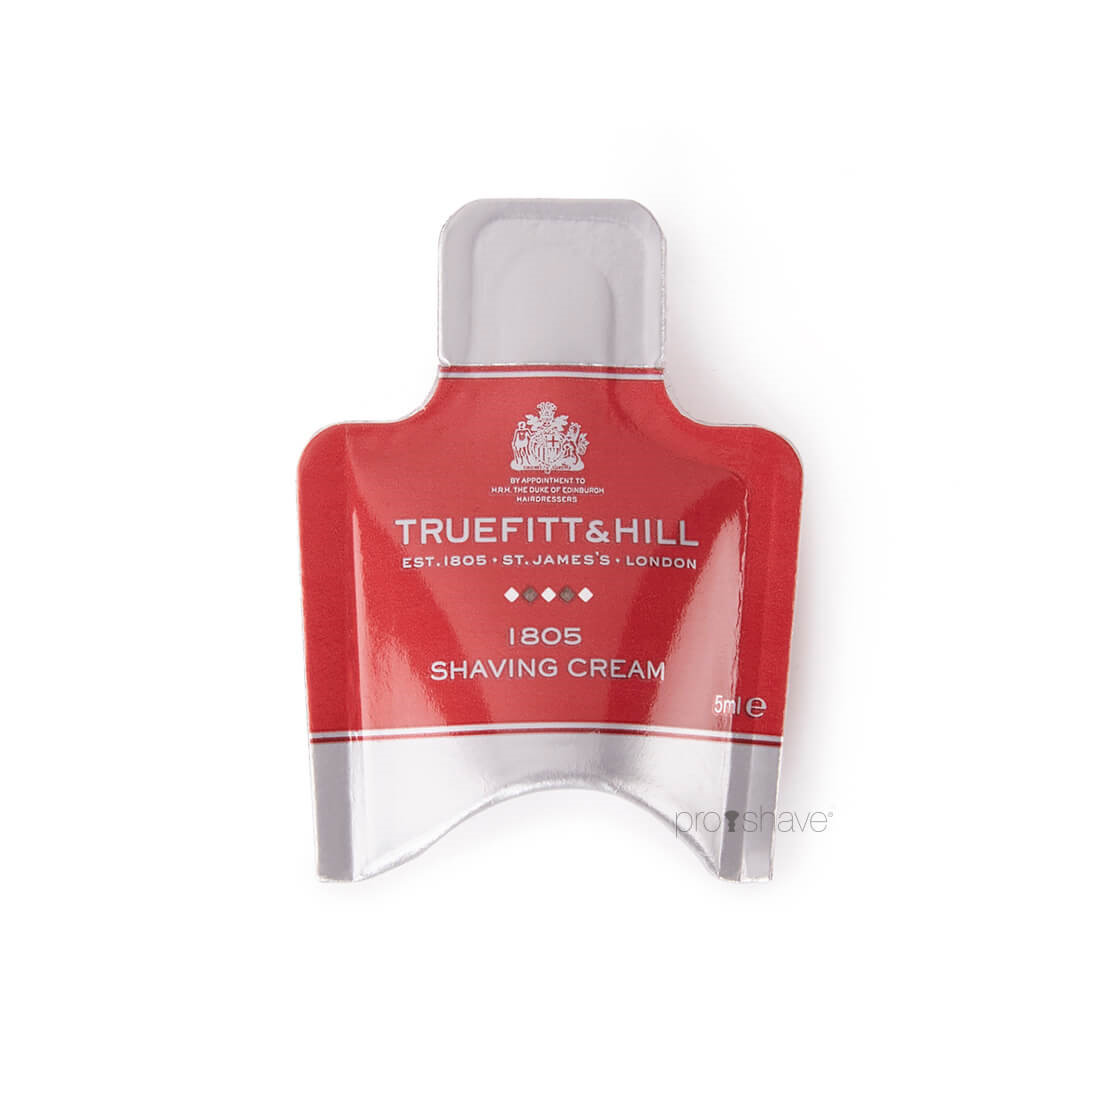 Truefitt & Hill 1805 Shaving Cream Sample Pack, 5 ml.